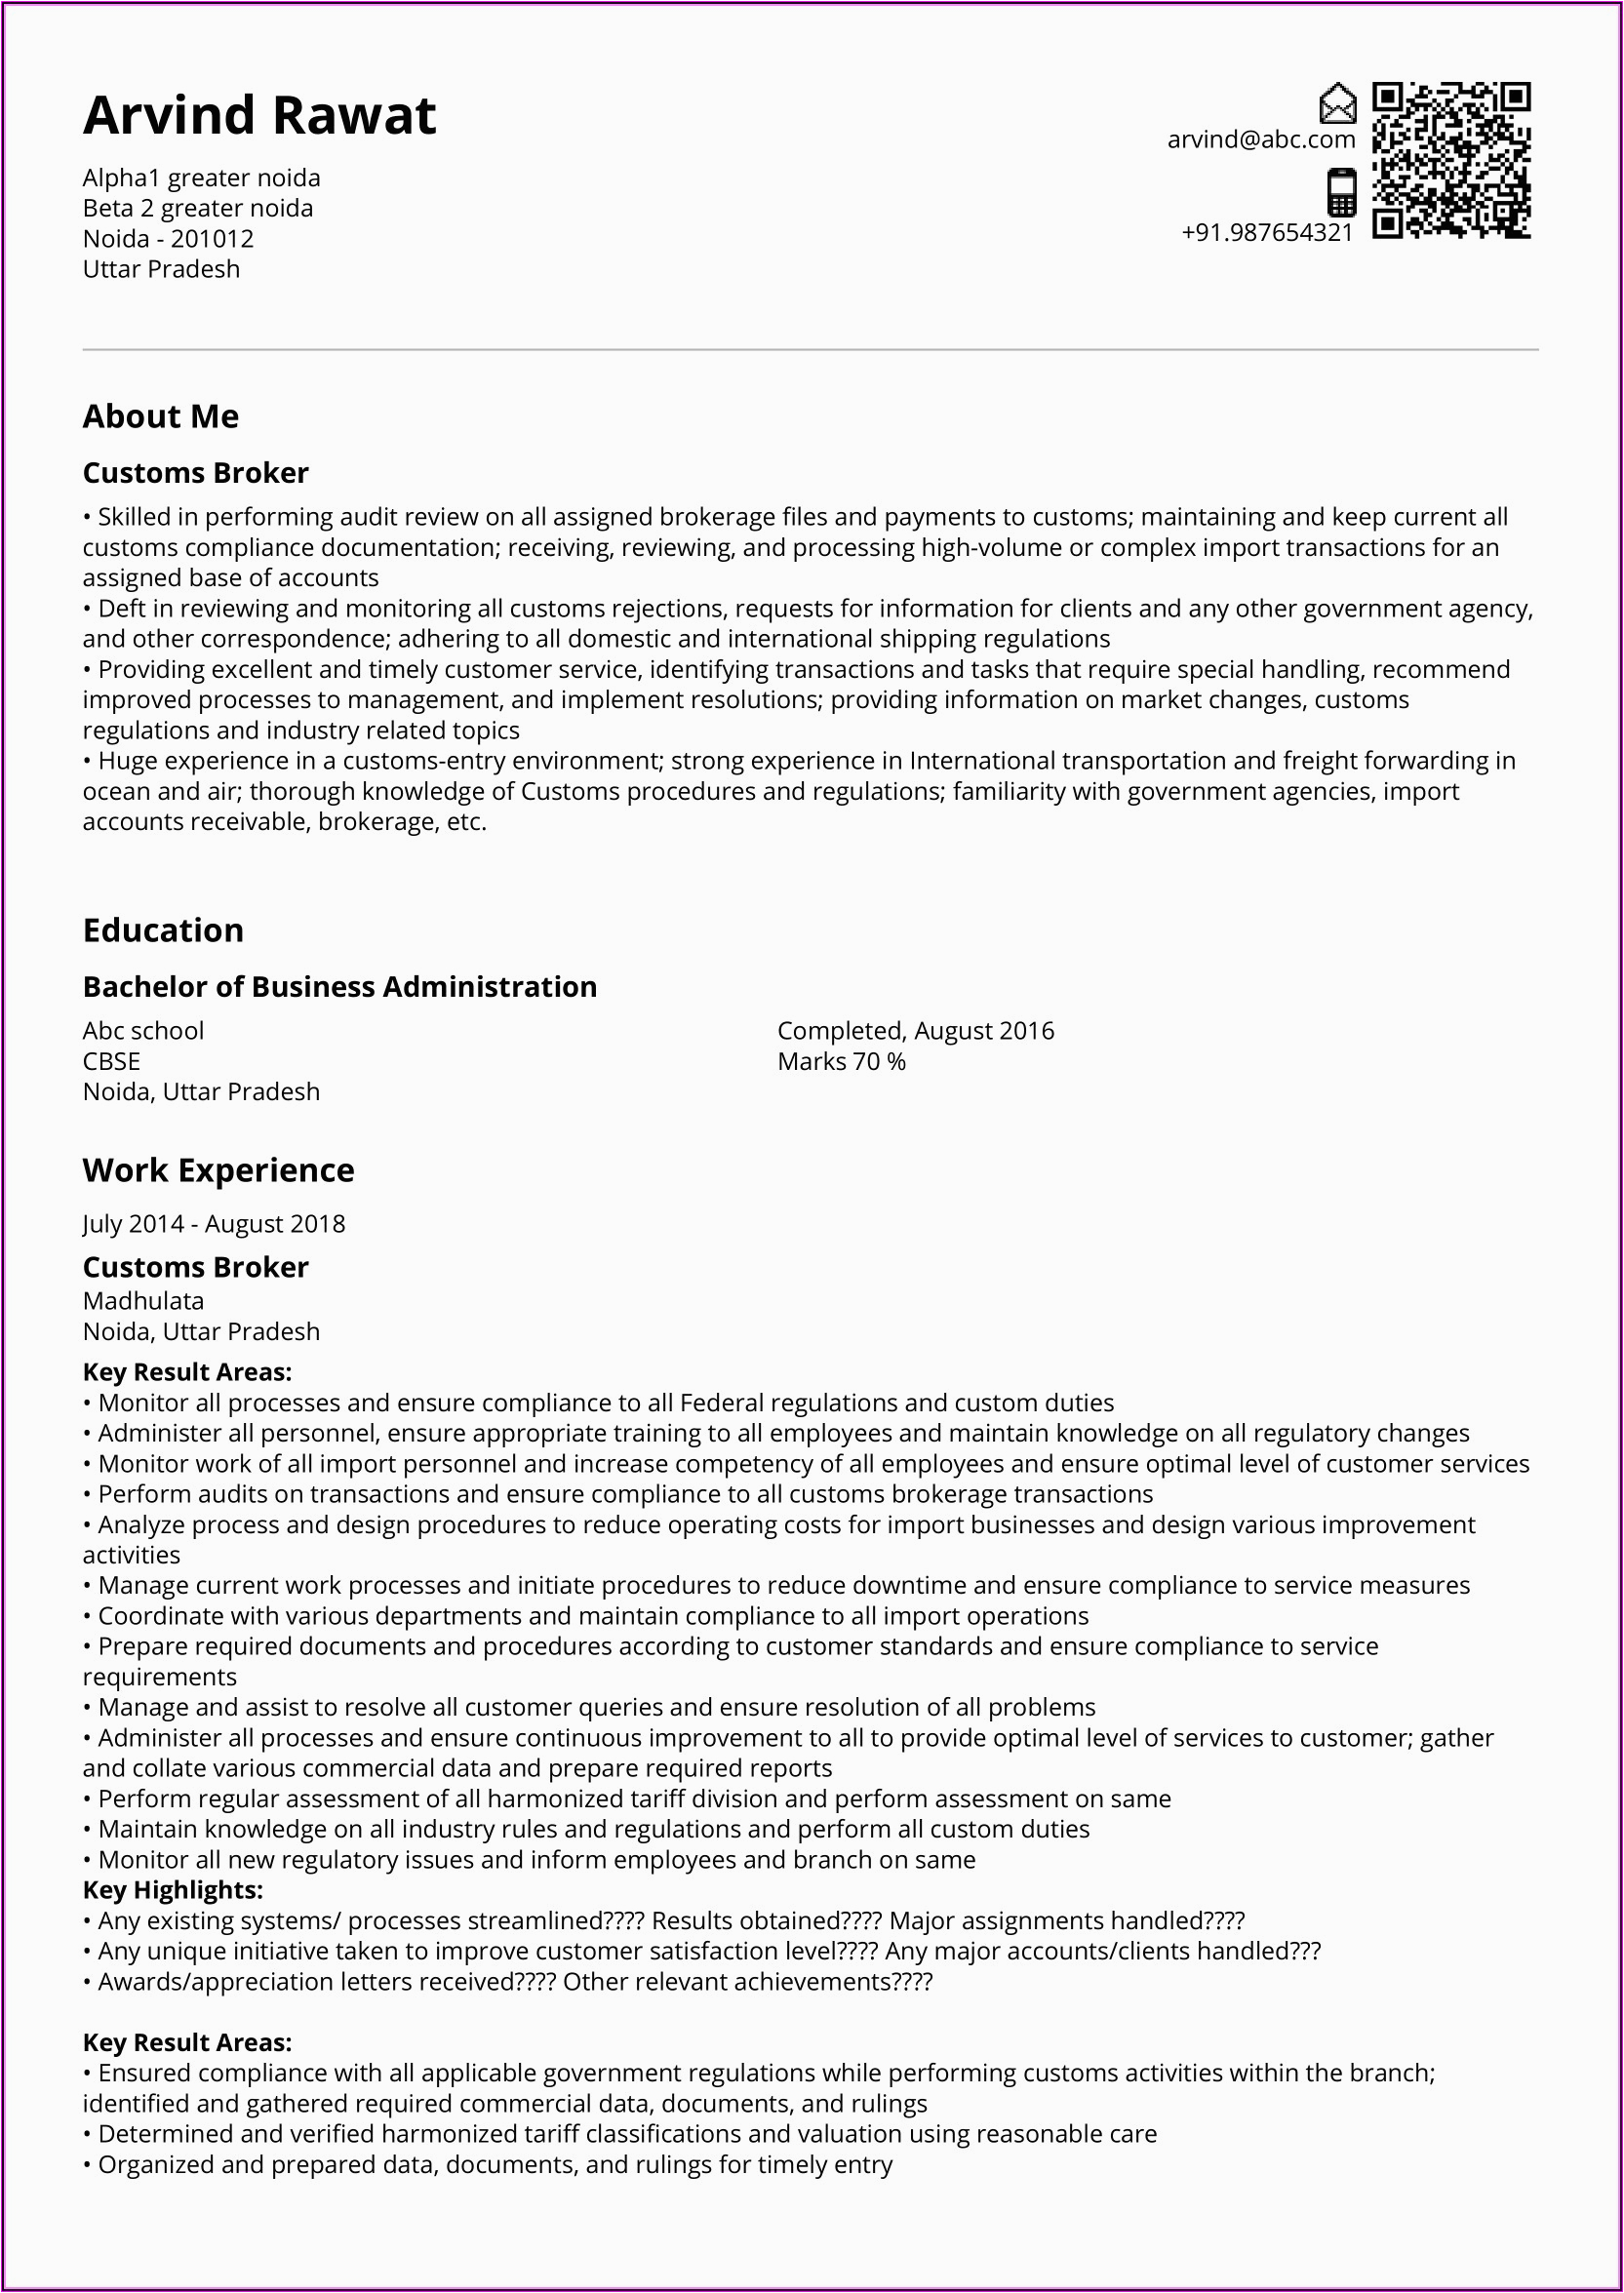 Sample Resume for Freight forwarding Sales Manager Resume Objective for Freight forwarding Pany Resume